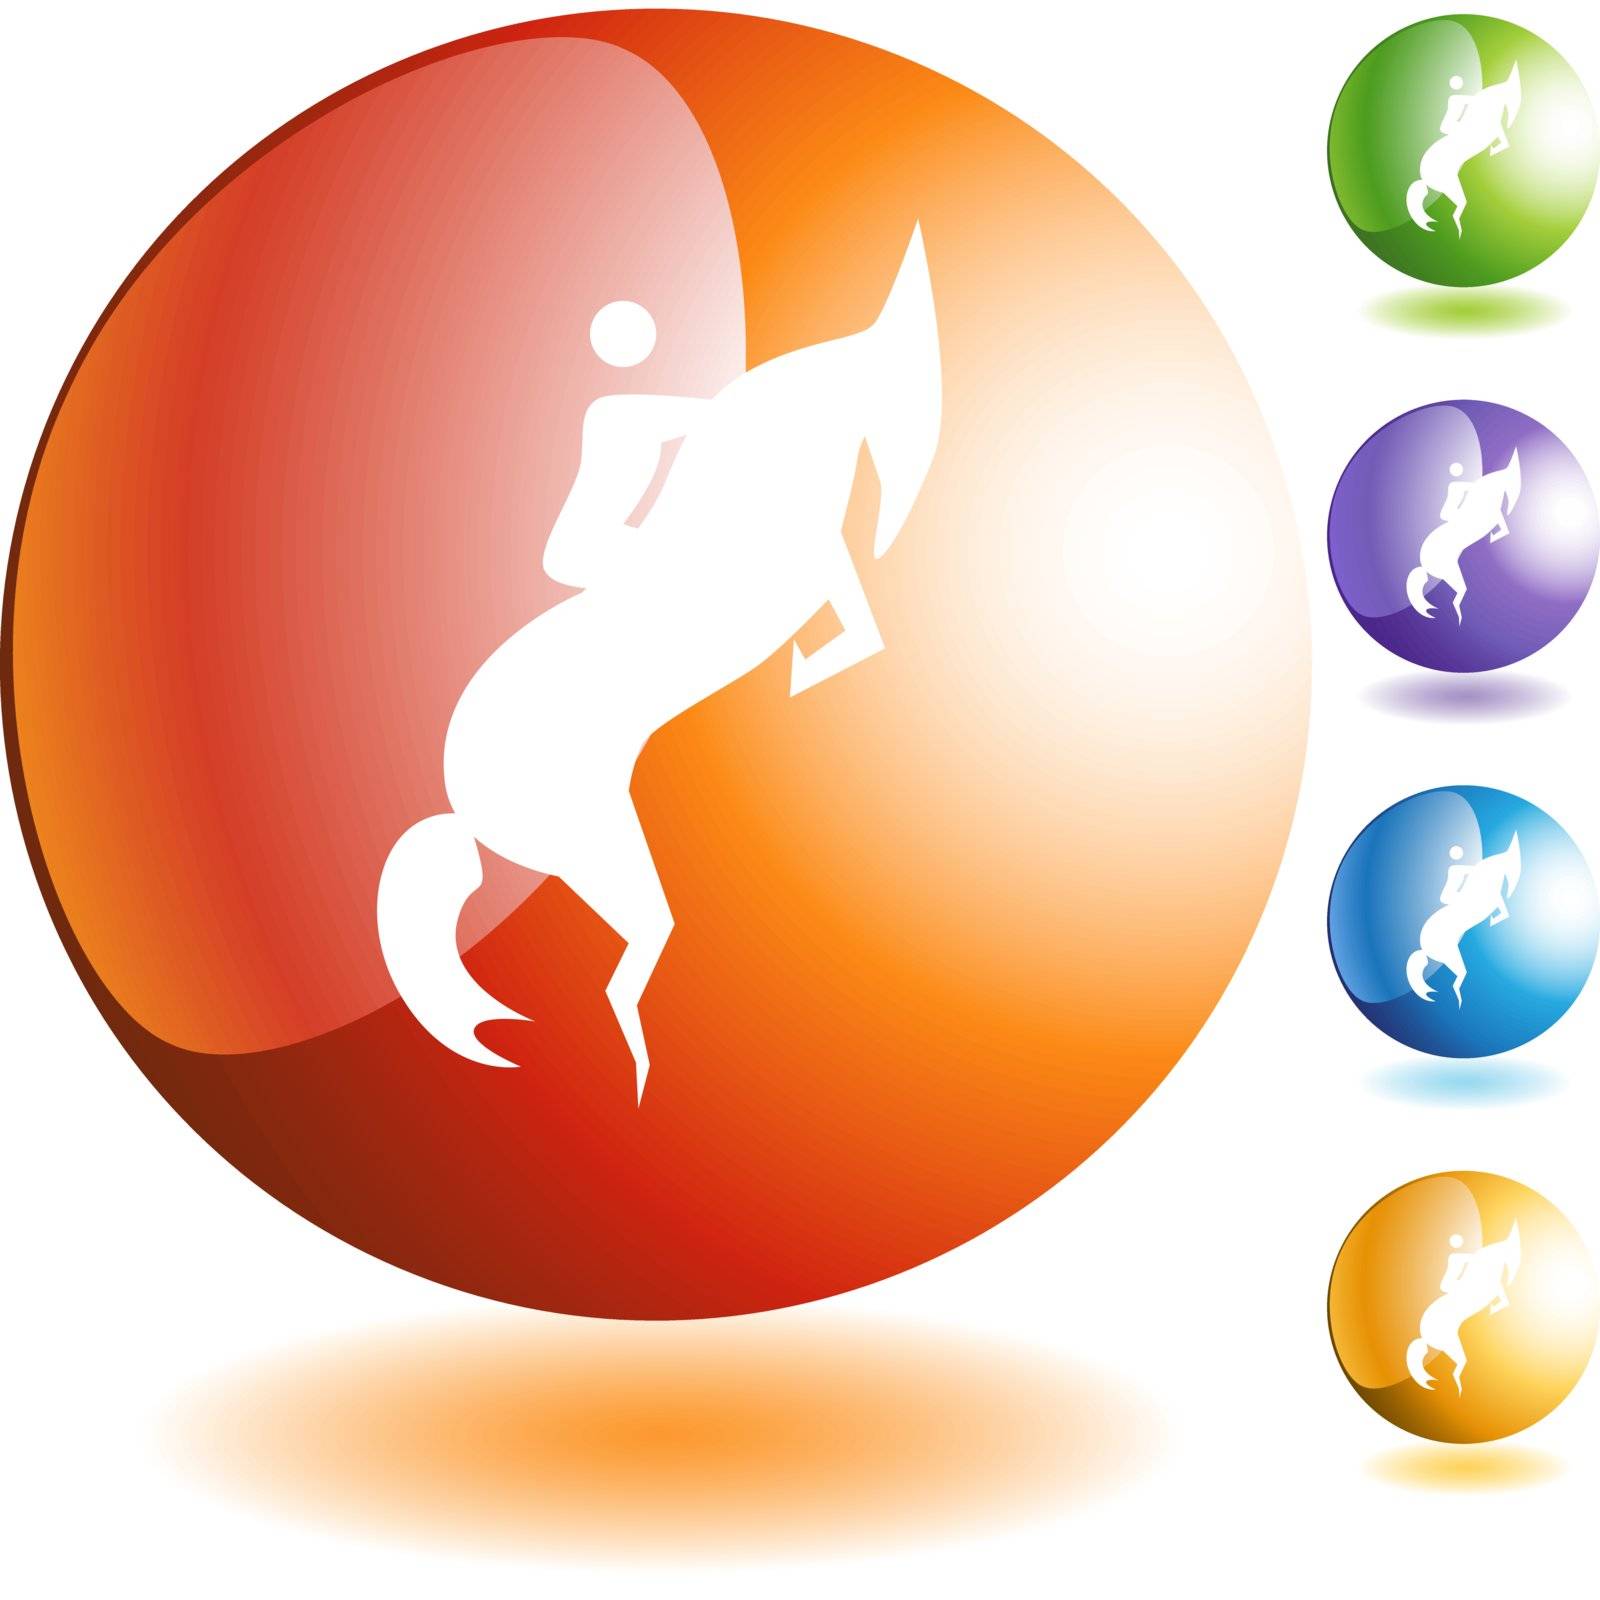 Horse jockey stick figure isolated web icon on a background.